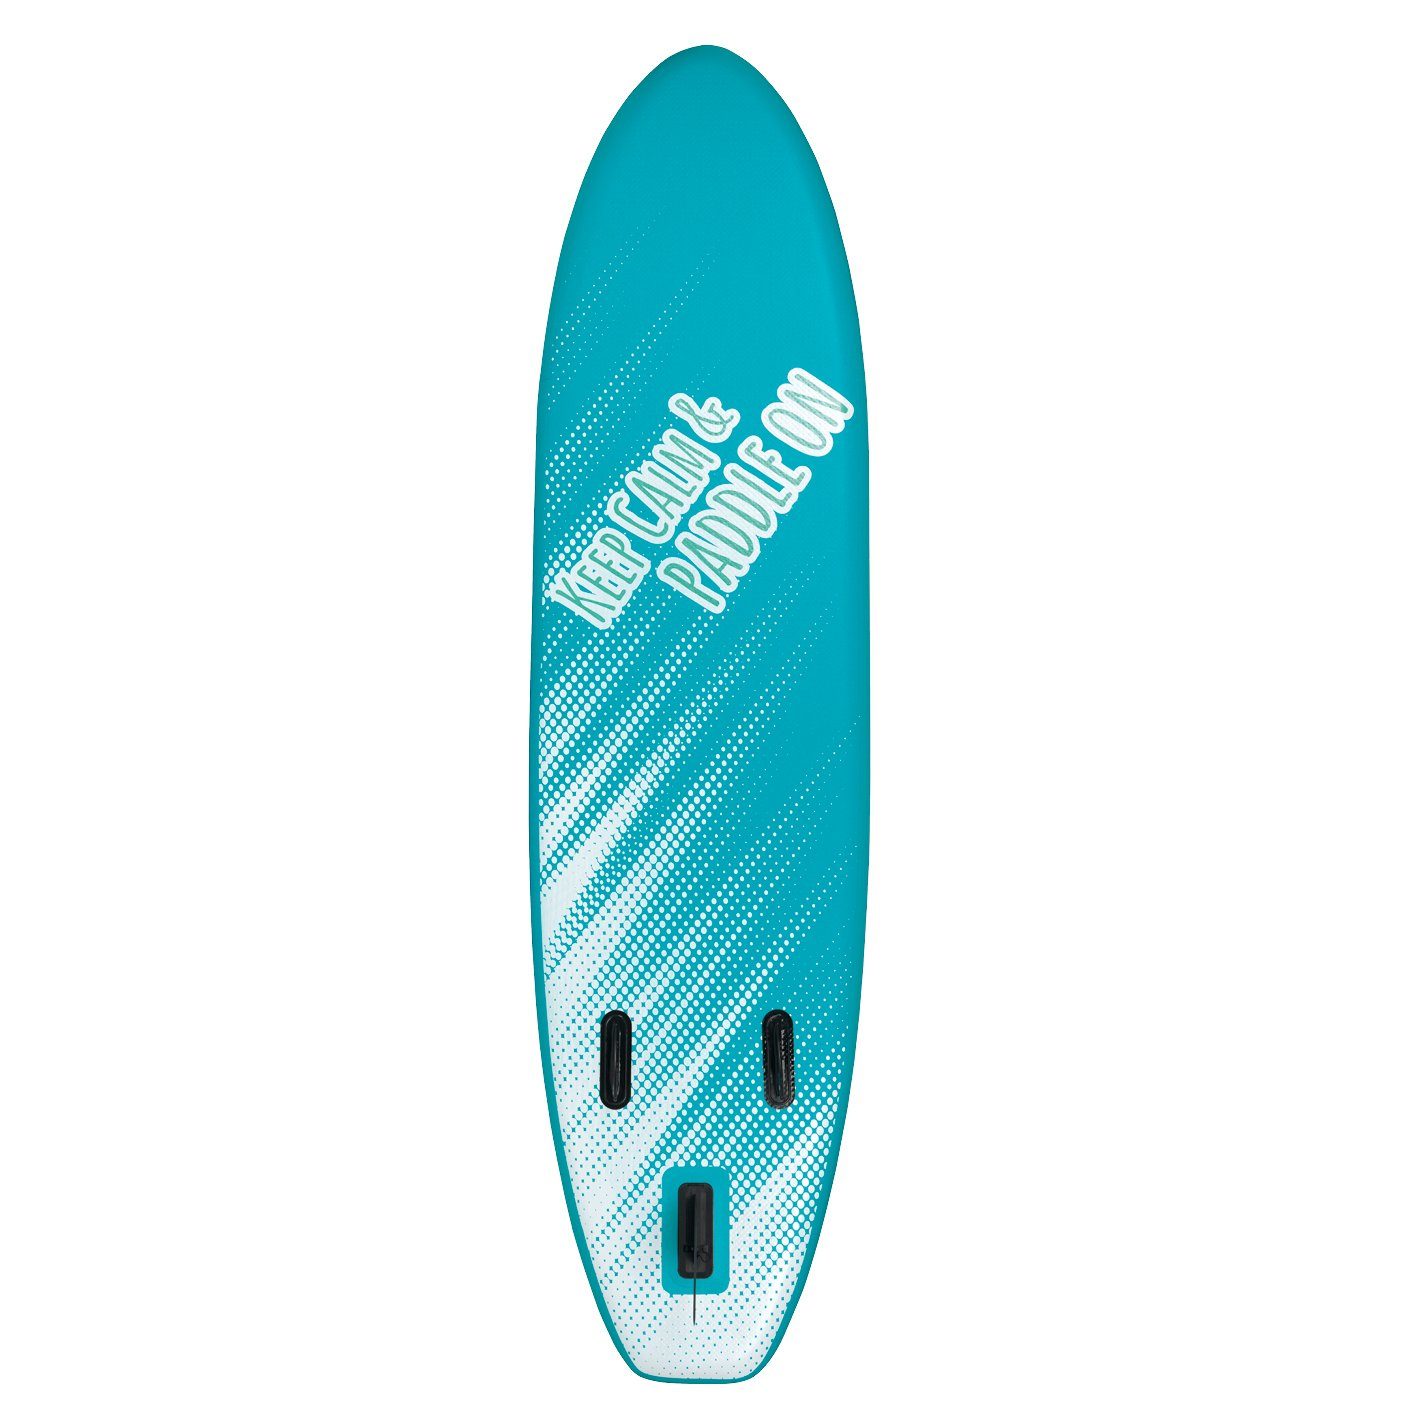 Zubehör, 110 Komplett kg, cm, up Stand-Up Board inkl. 300 Inflatable türkis/weiß Stand MAXXMEE Set SUP Paddel Paddle-Board Paddling SUP-Board